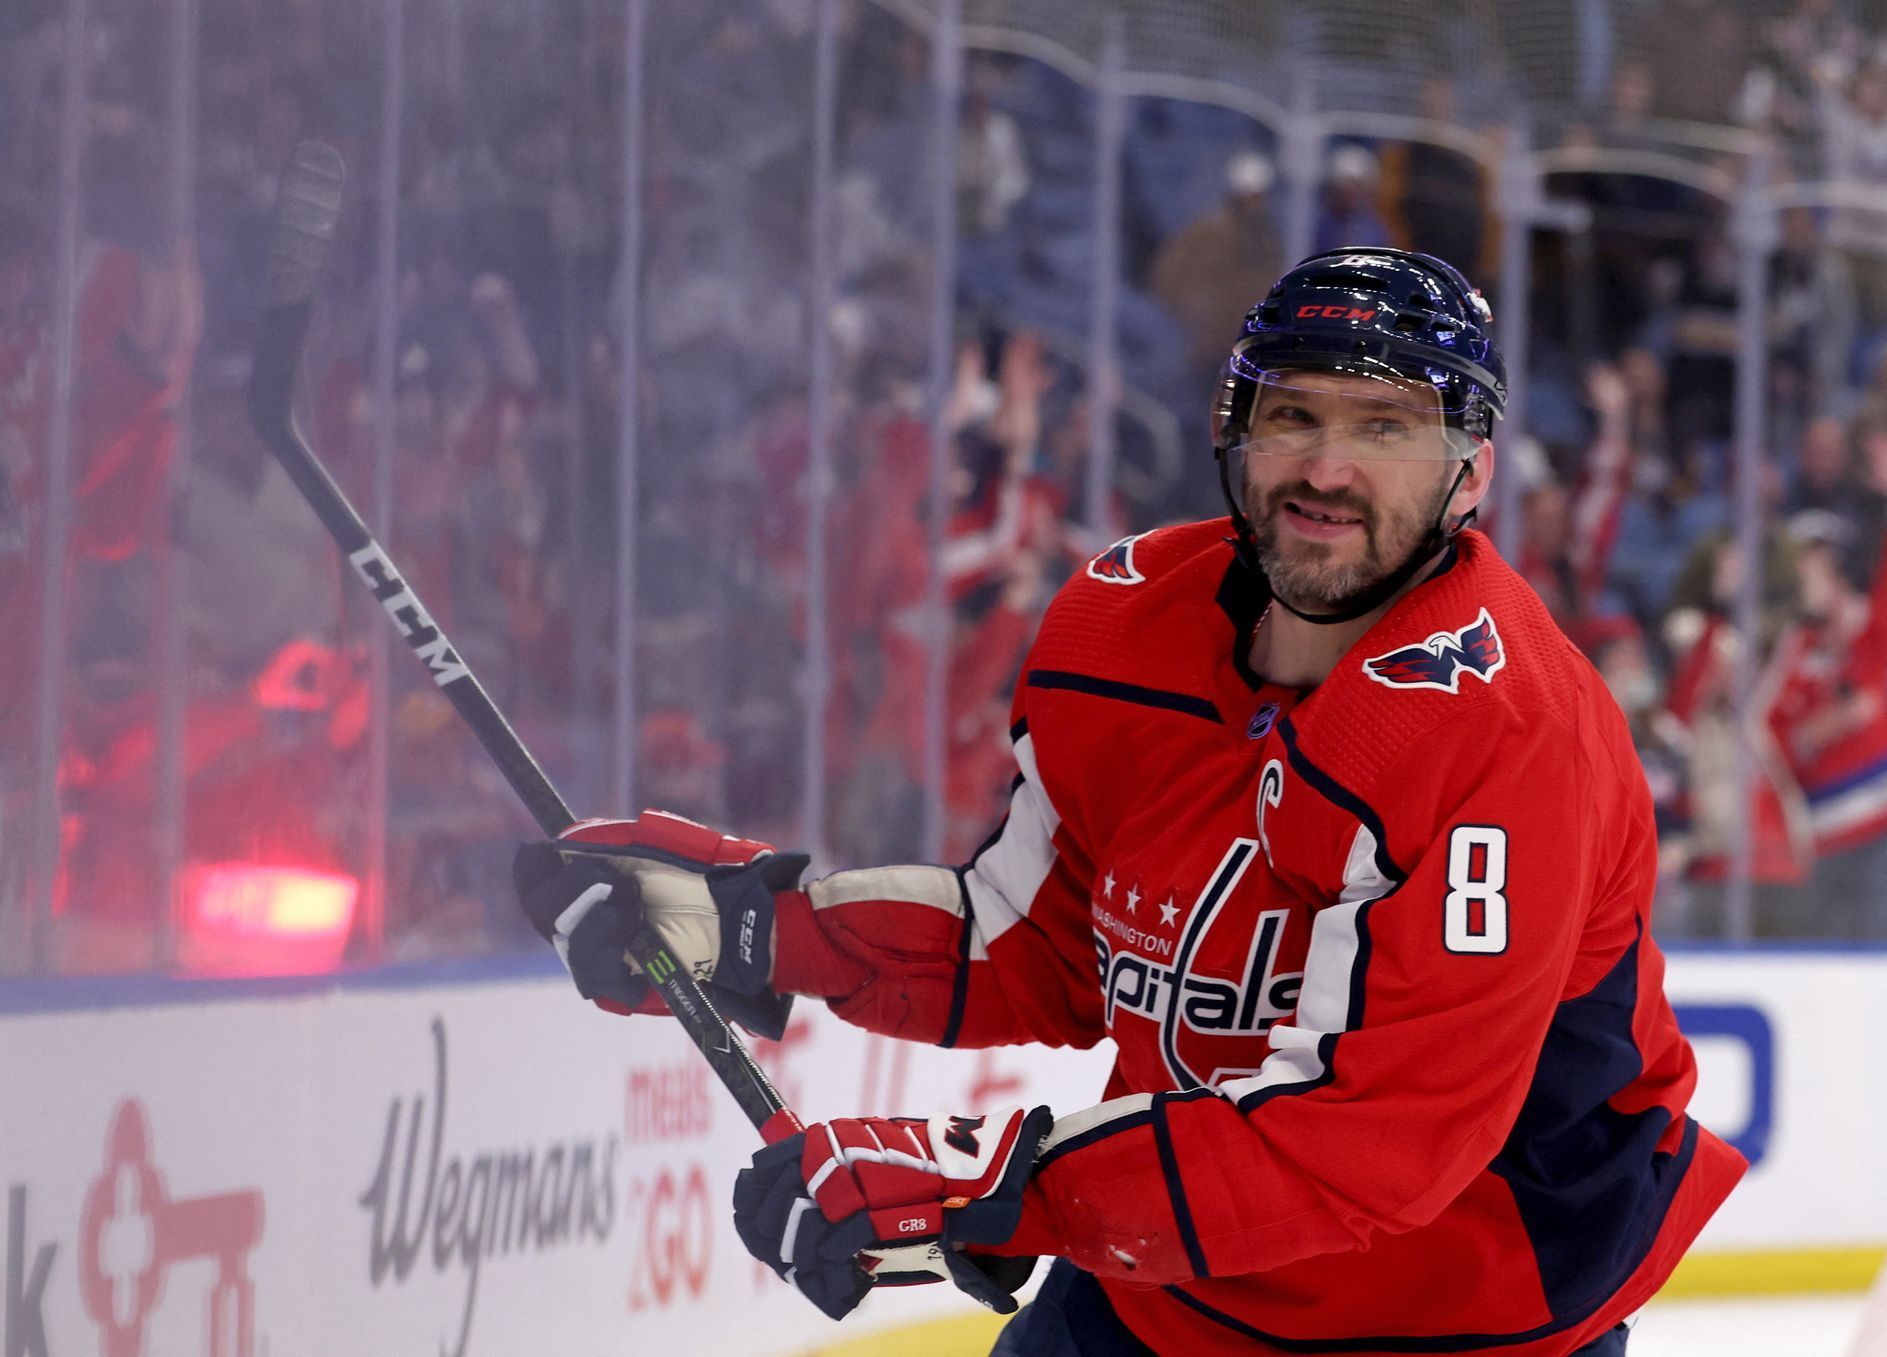 Alexandr Ovečkin NHL hokej Capitals